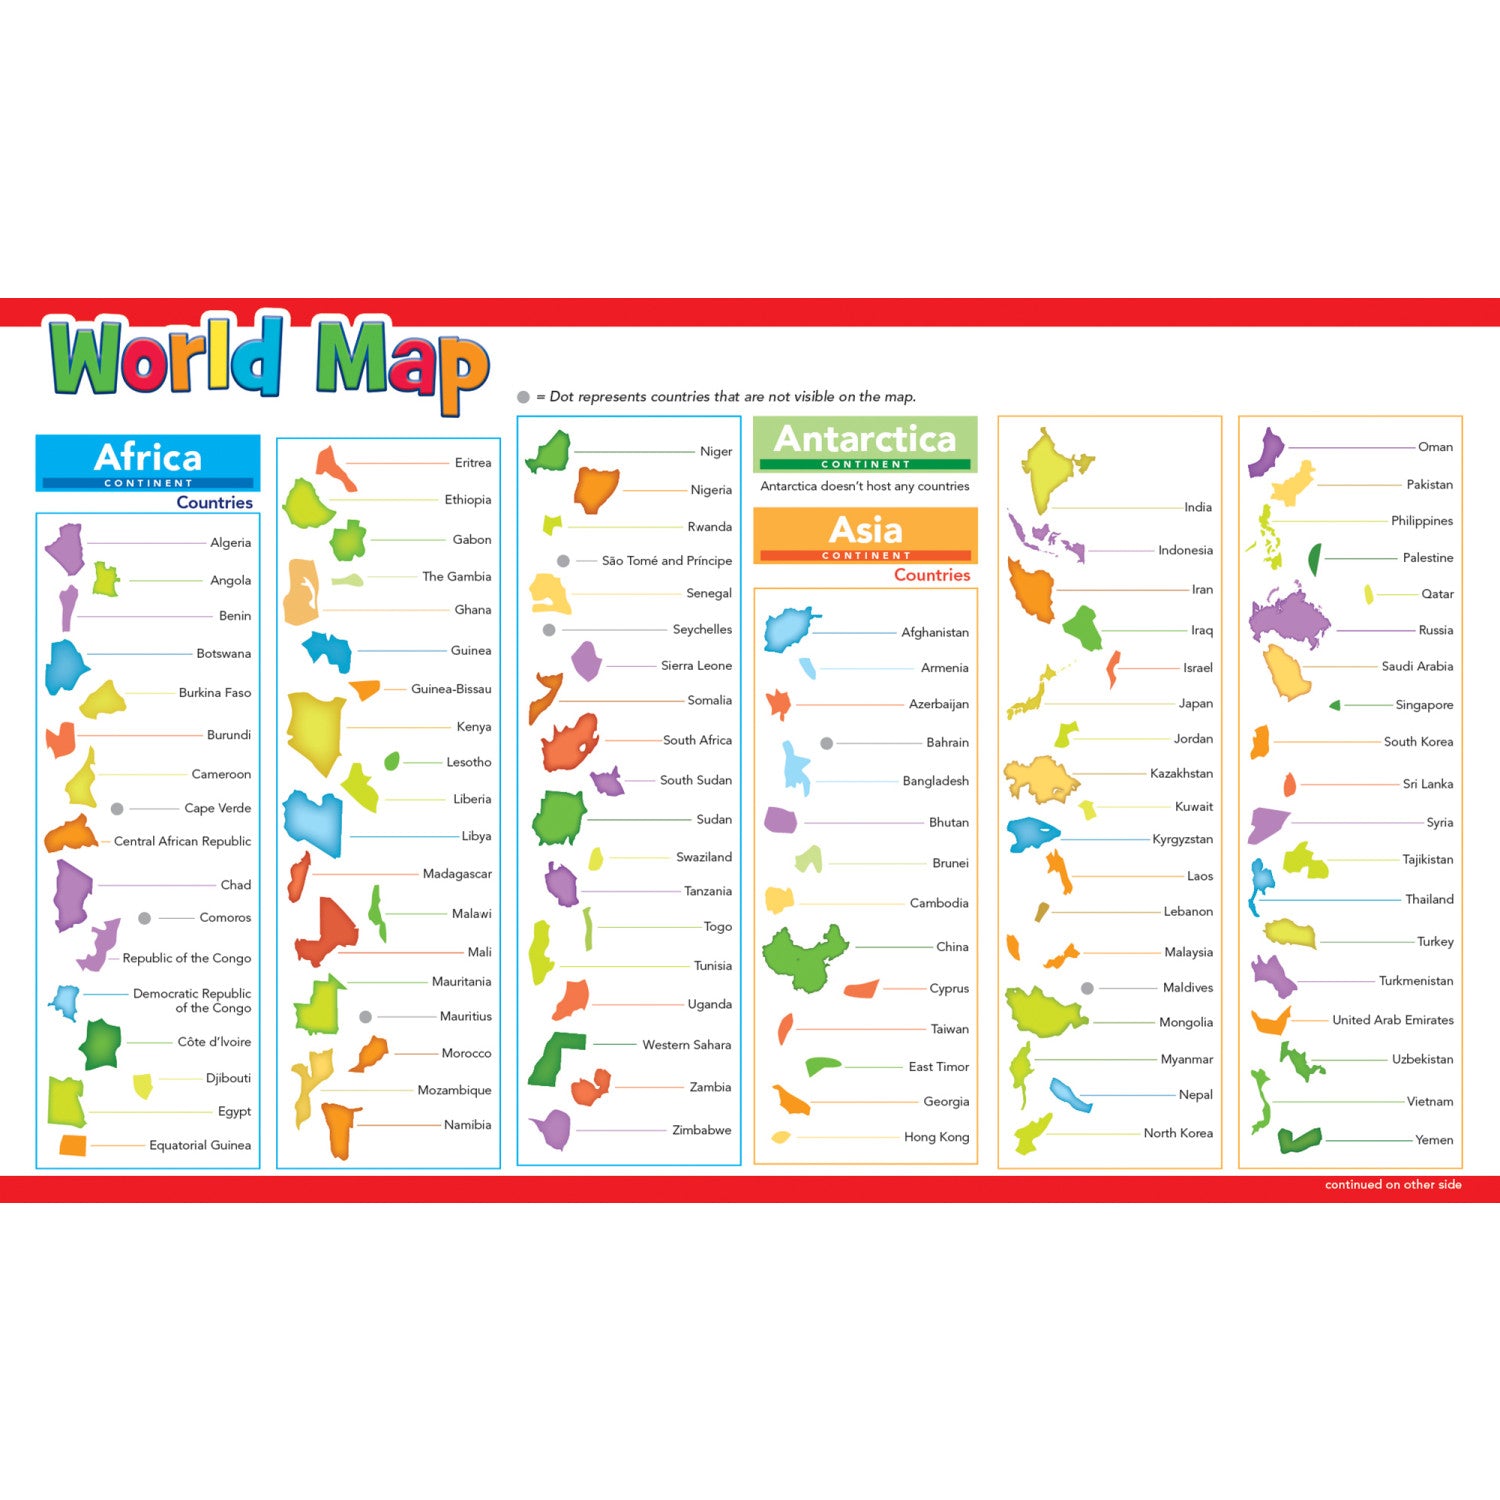 Explorer - World Map 60 Piece Jigsaw Puzzle